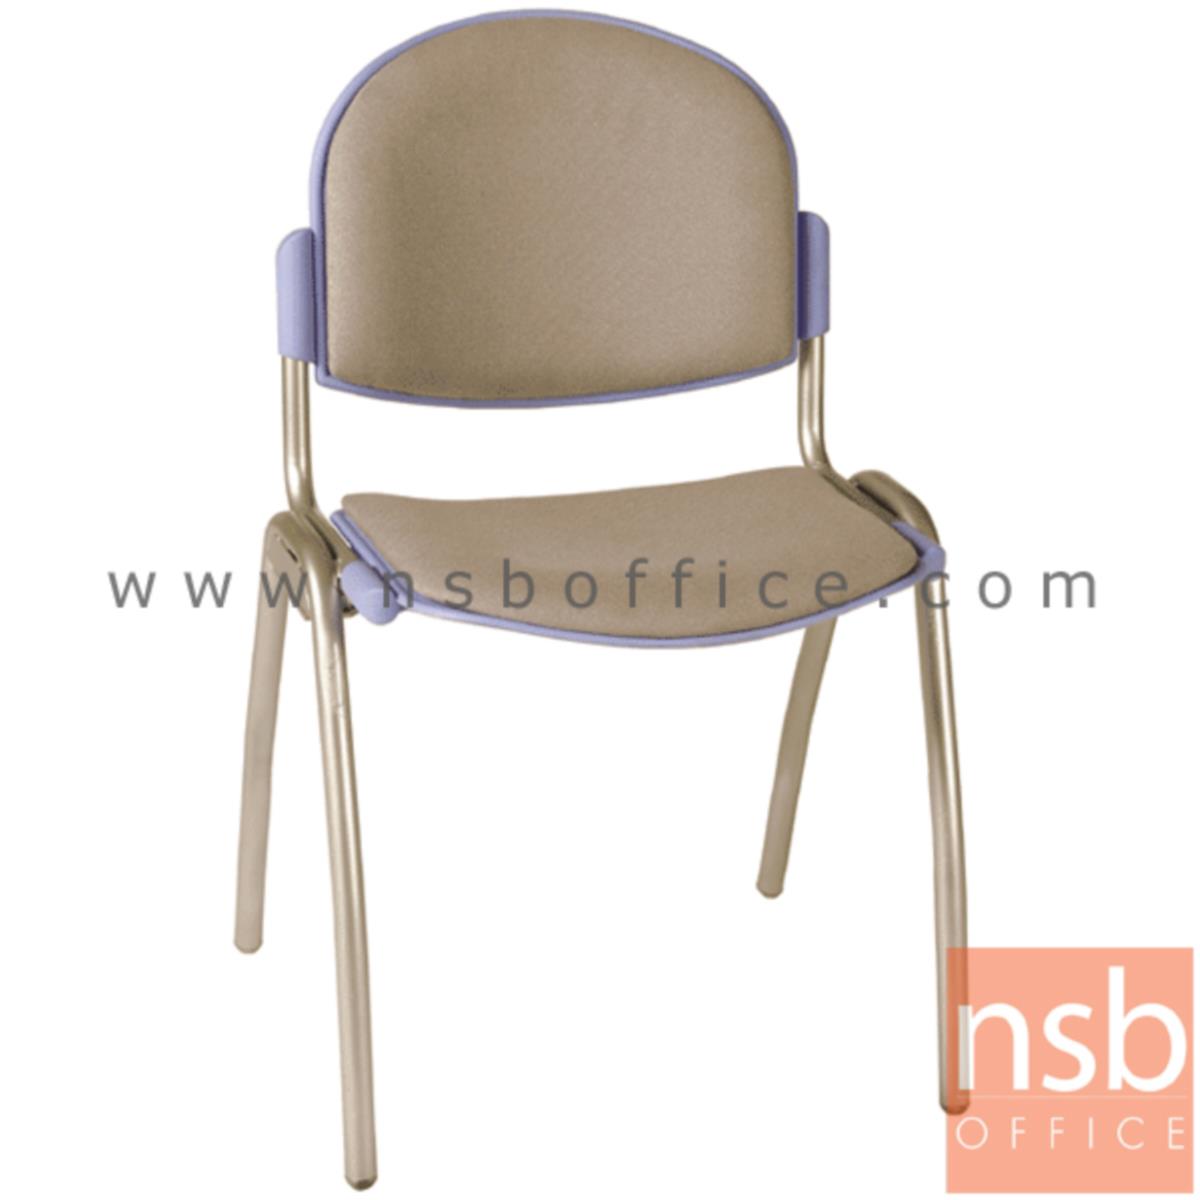 B05A063:เก้าอี้อเนกประสงค์เฟรมโพลี่ รุ่น A056-446  ขาเหล็ก